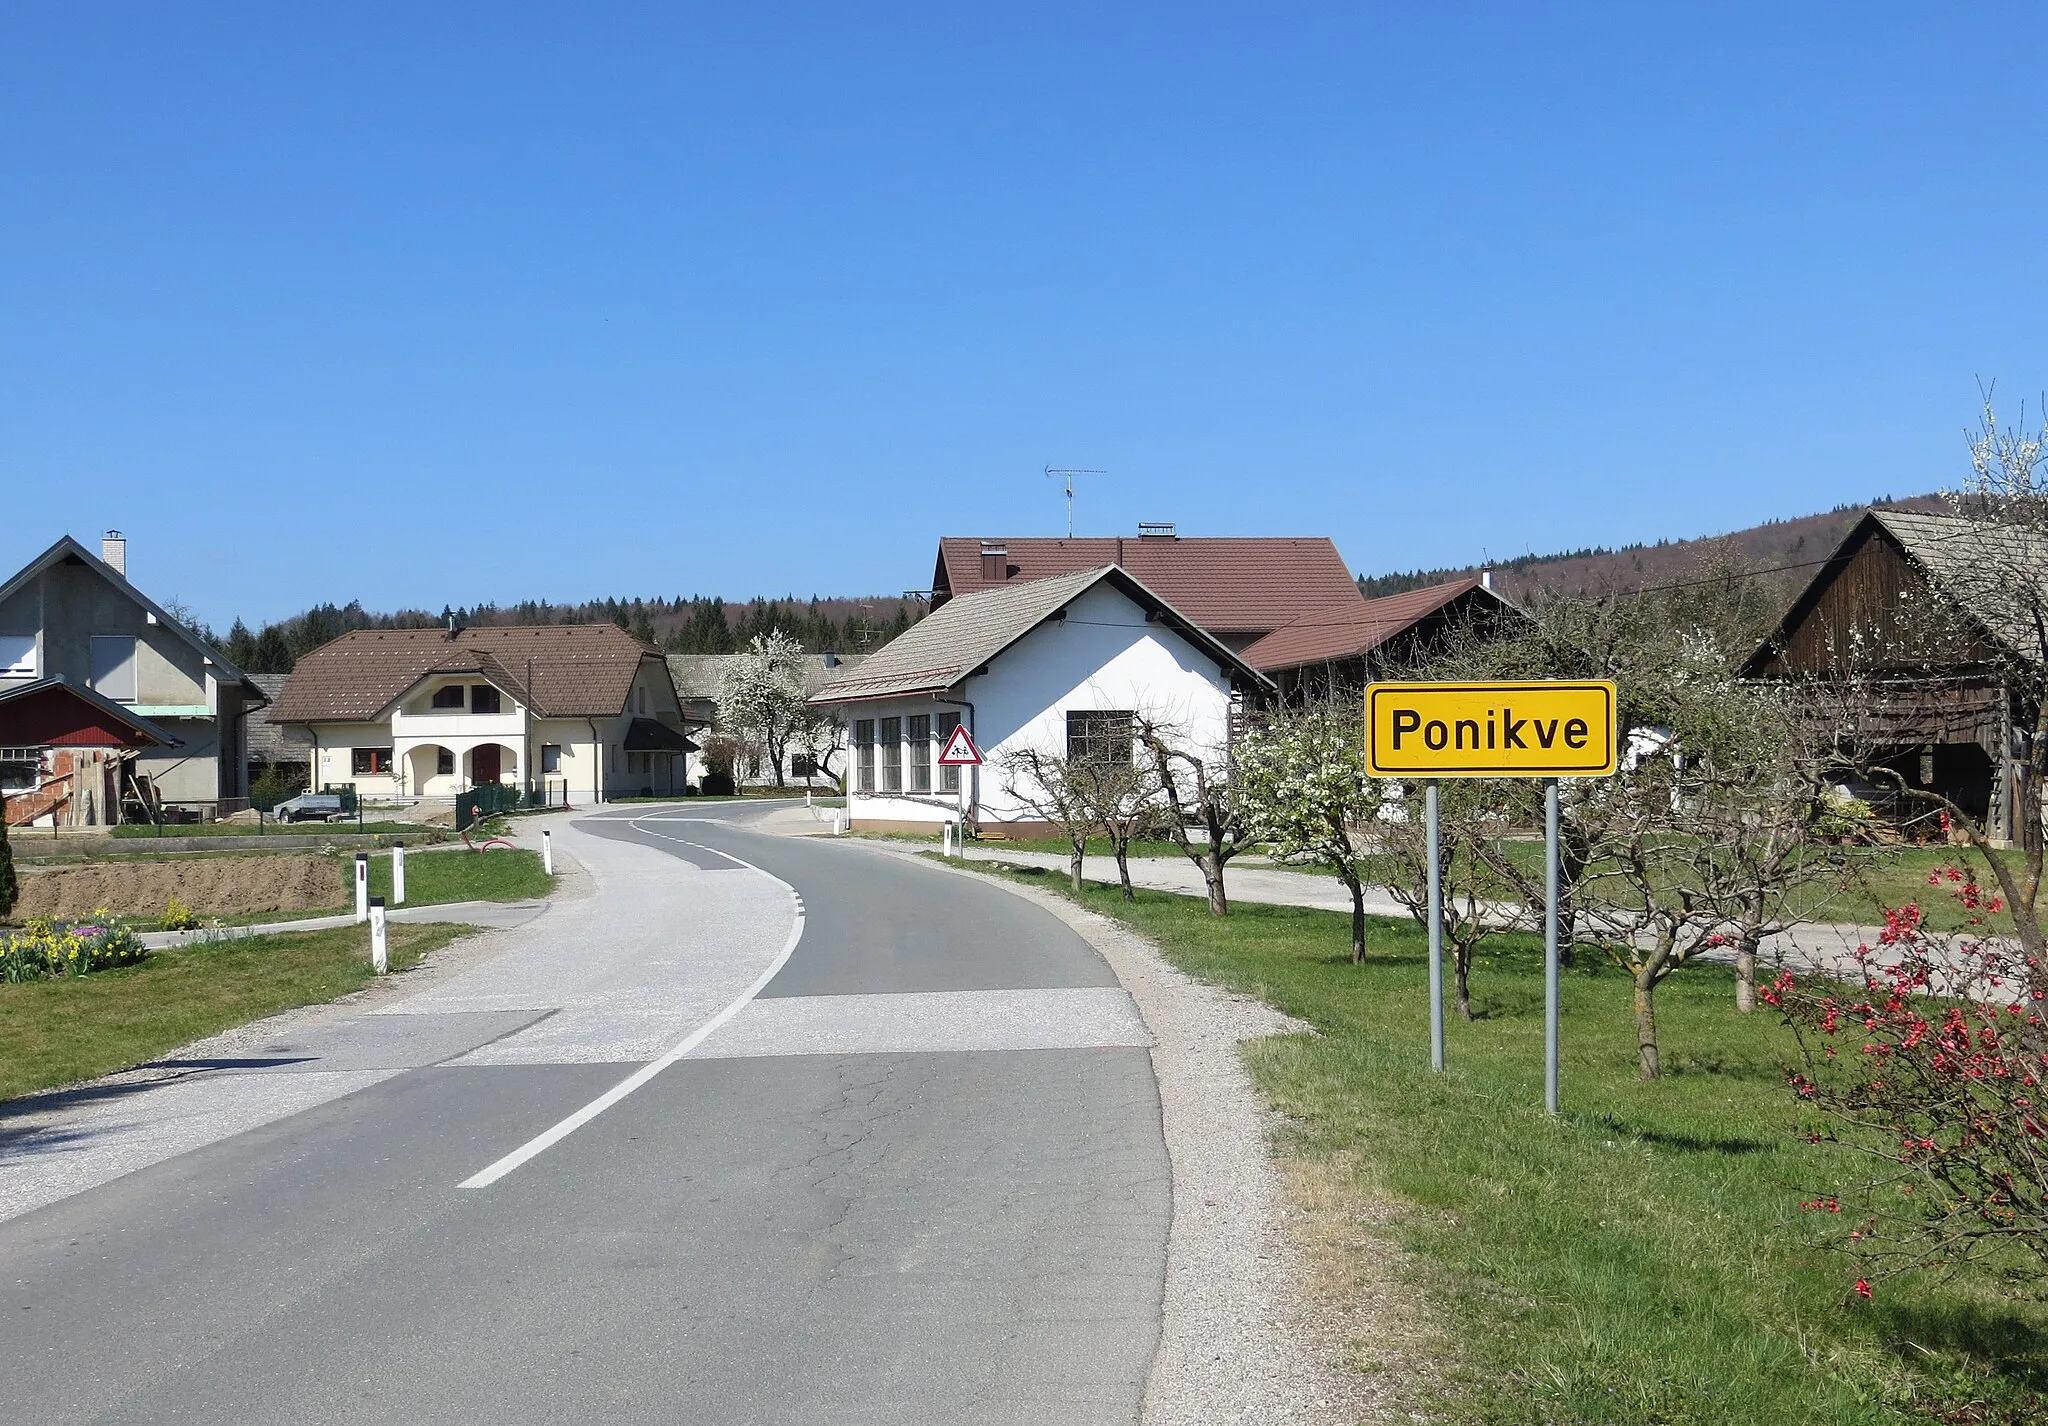 Photo showing: Ponikve, Municipality of Dobrepolje, Slovenia